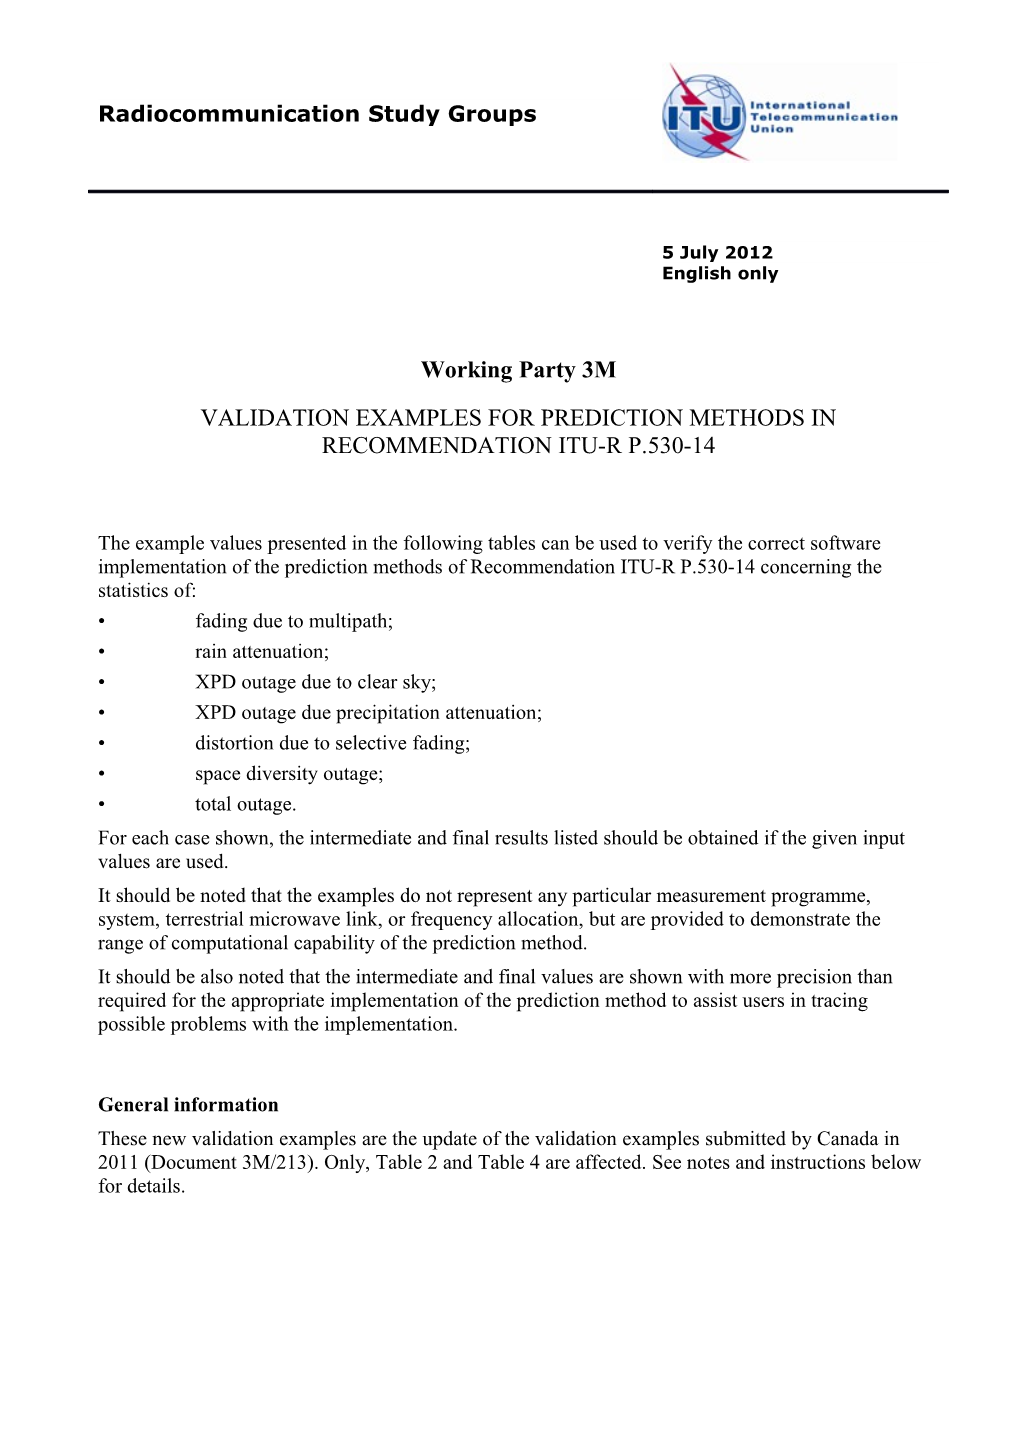 Validation Examples for Rec. ITU-R P.530